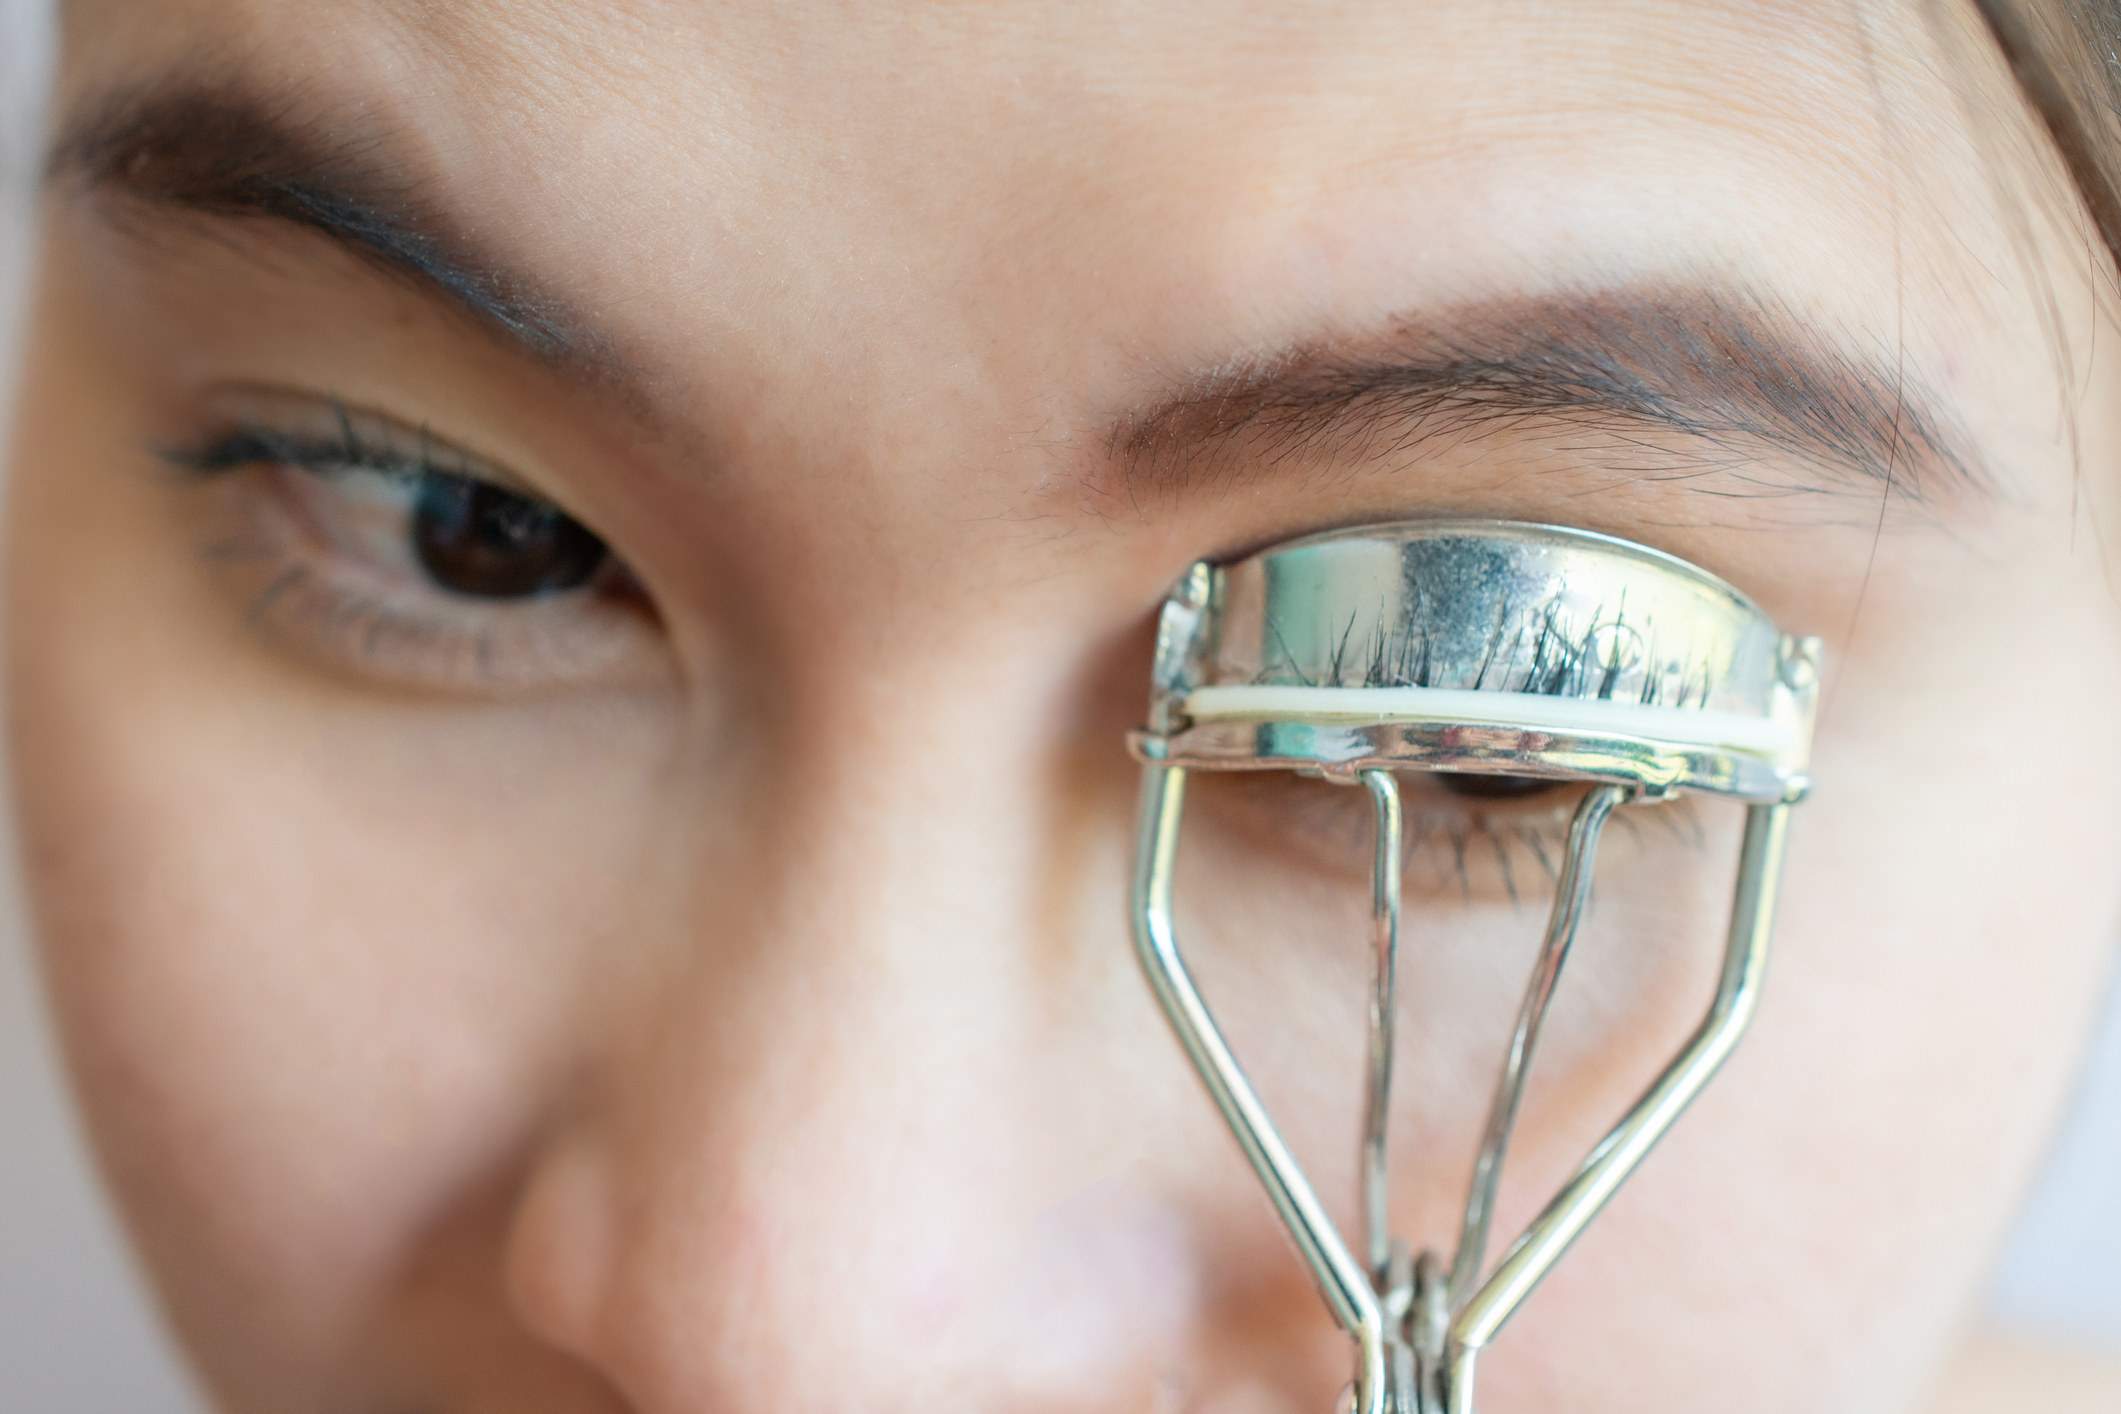 Woman using an eyelash curler